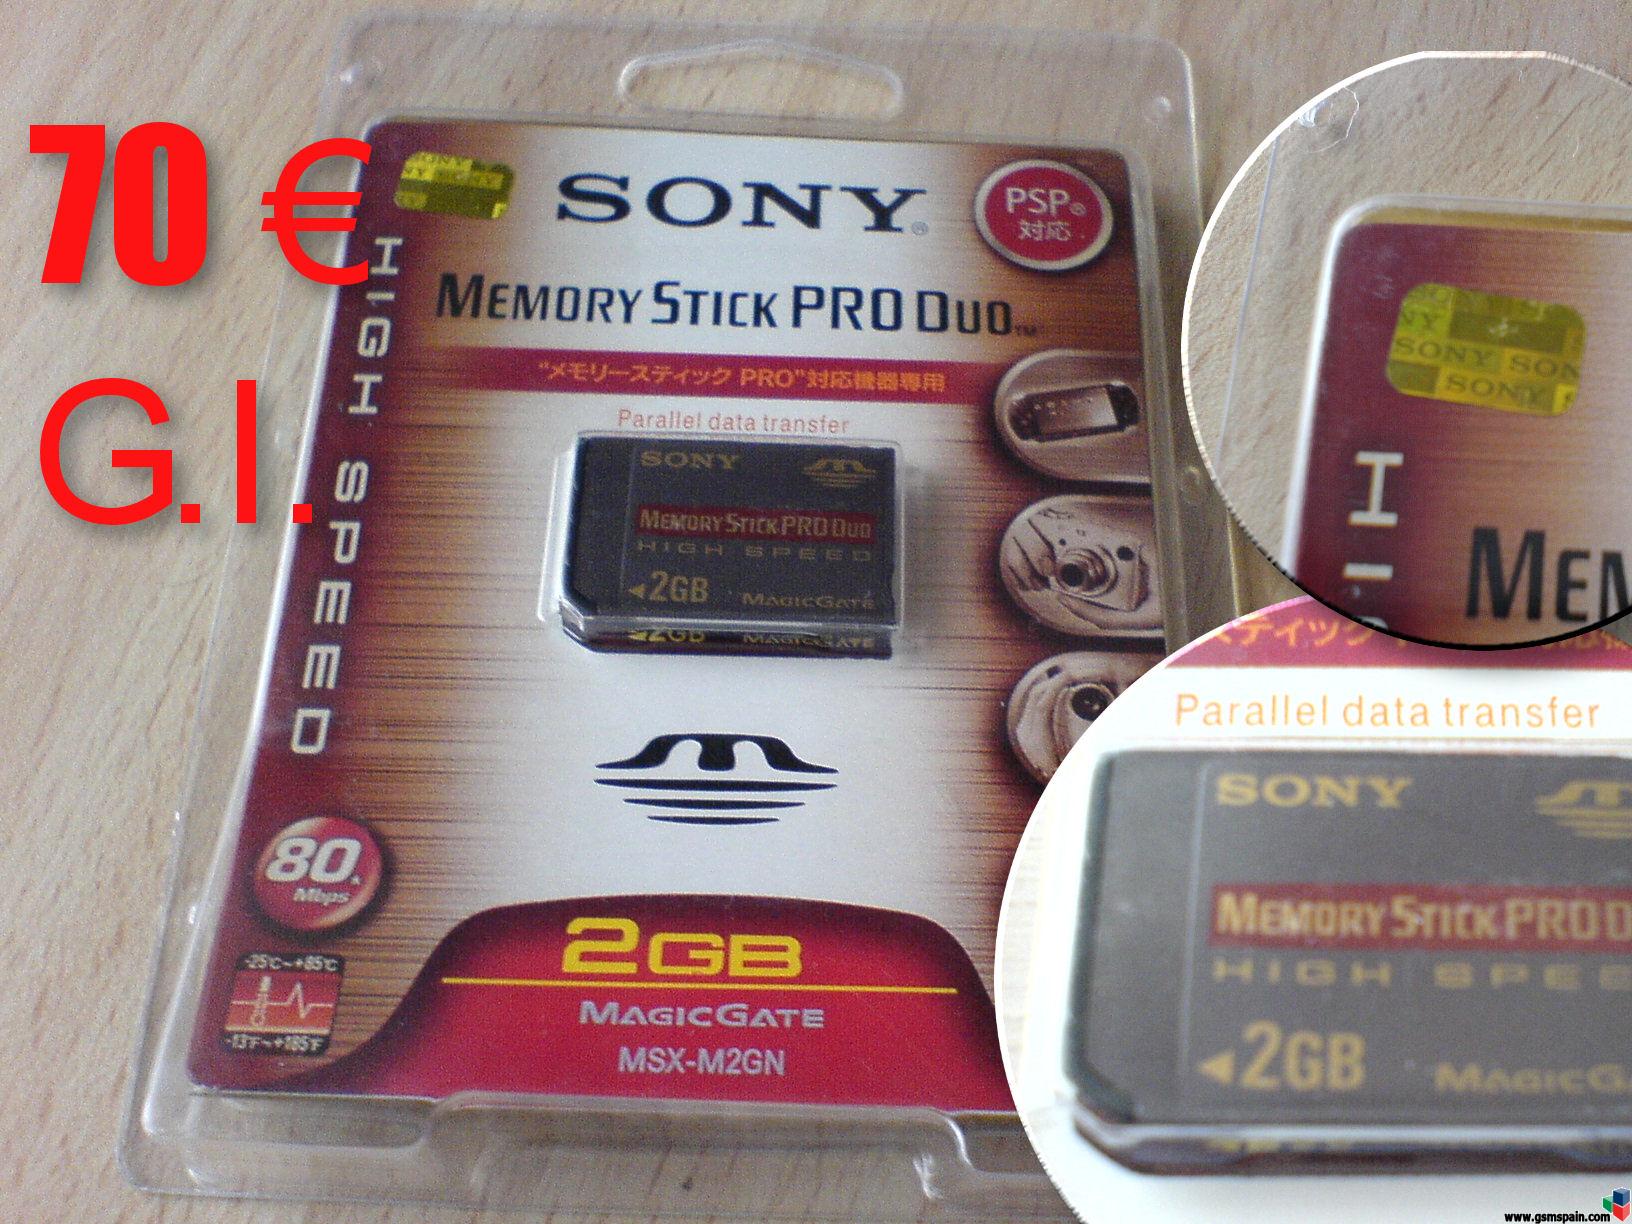 Sony MSDUO PRO 2 Gbs -> 70euros G.I.